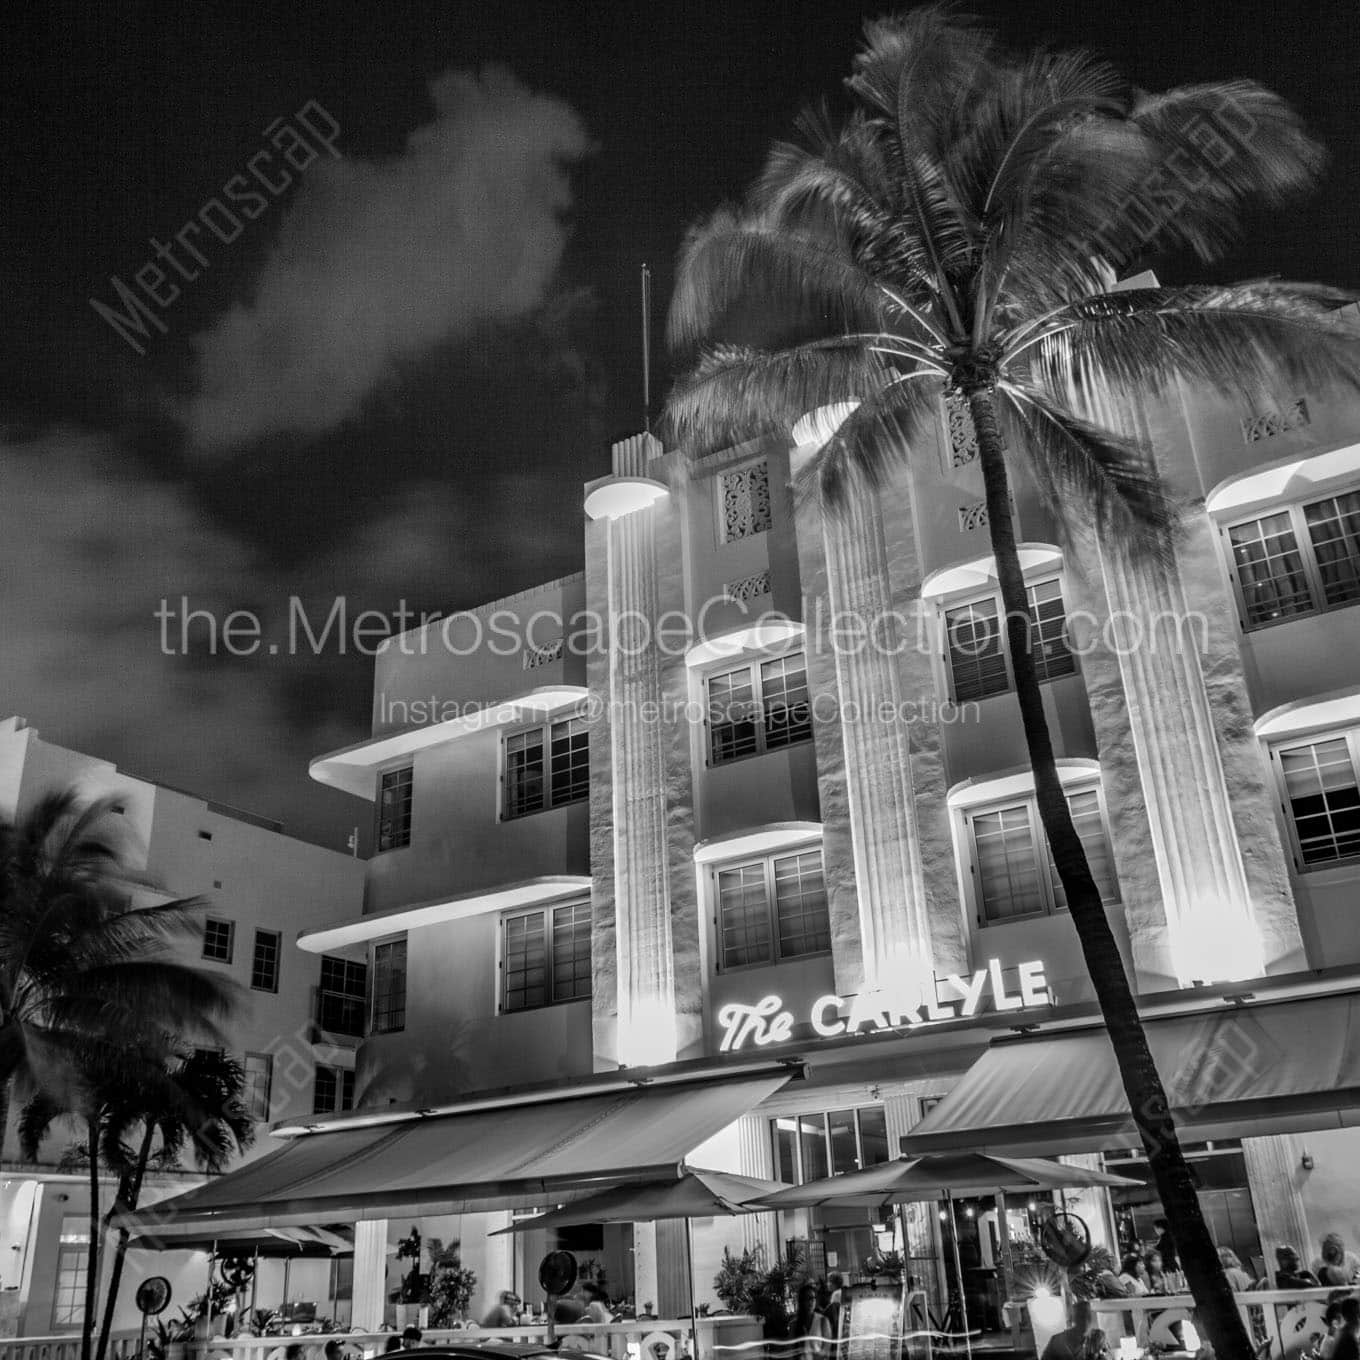 carlyle hotel south beach miami Black & White Office Art